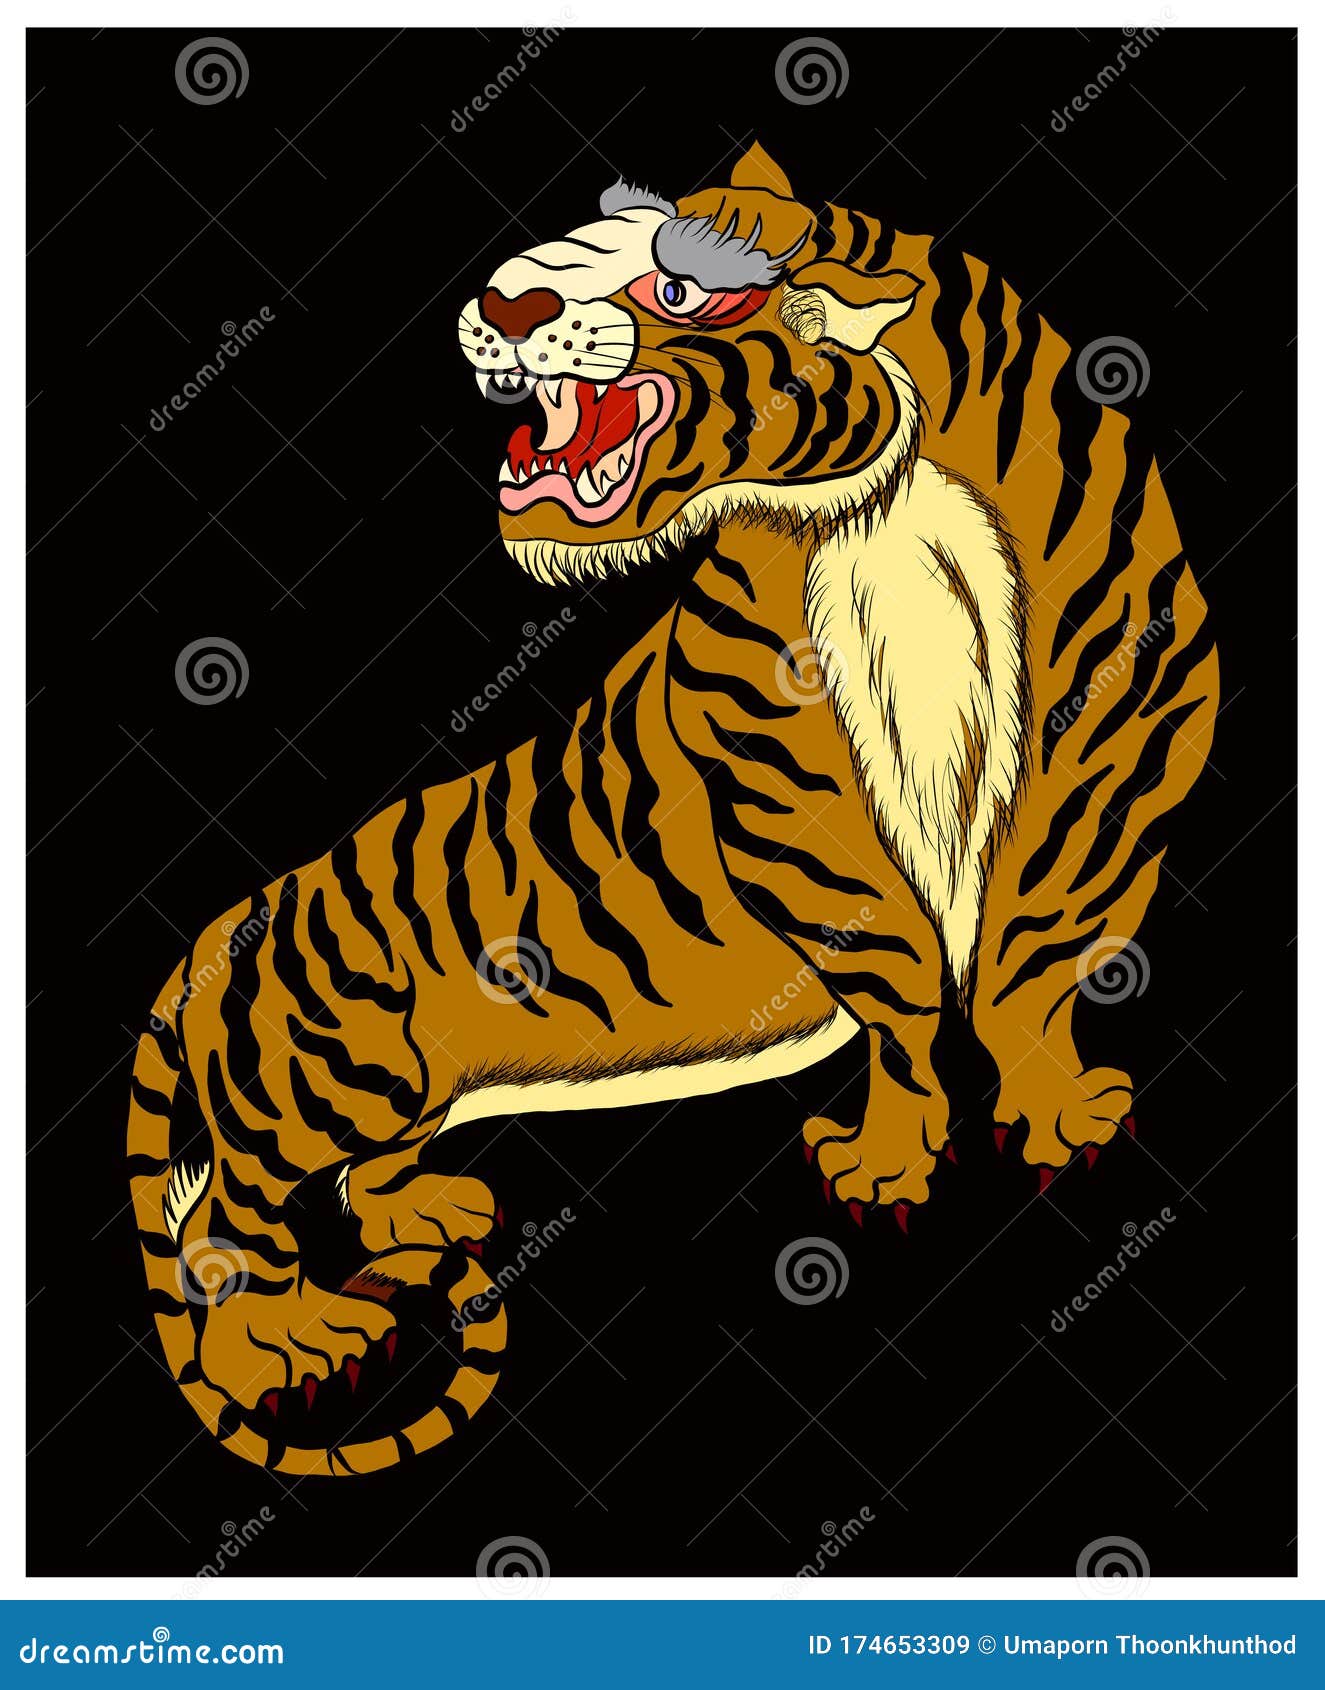 Premium Vector  Traditional japanese tiger tattoo